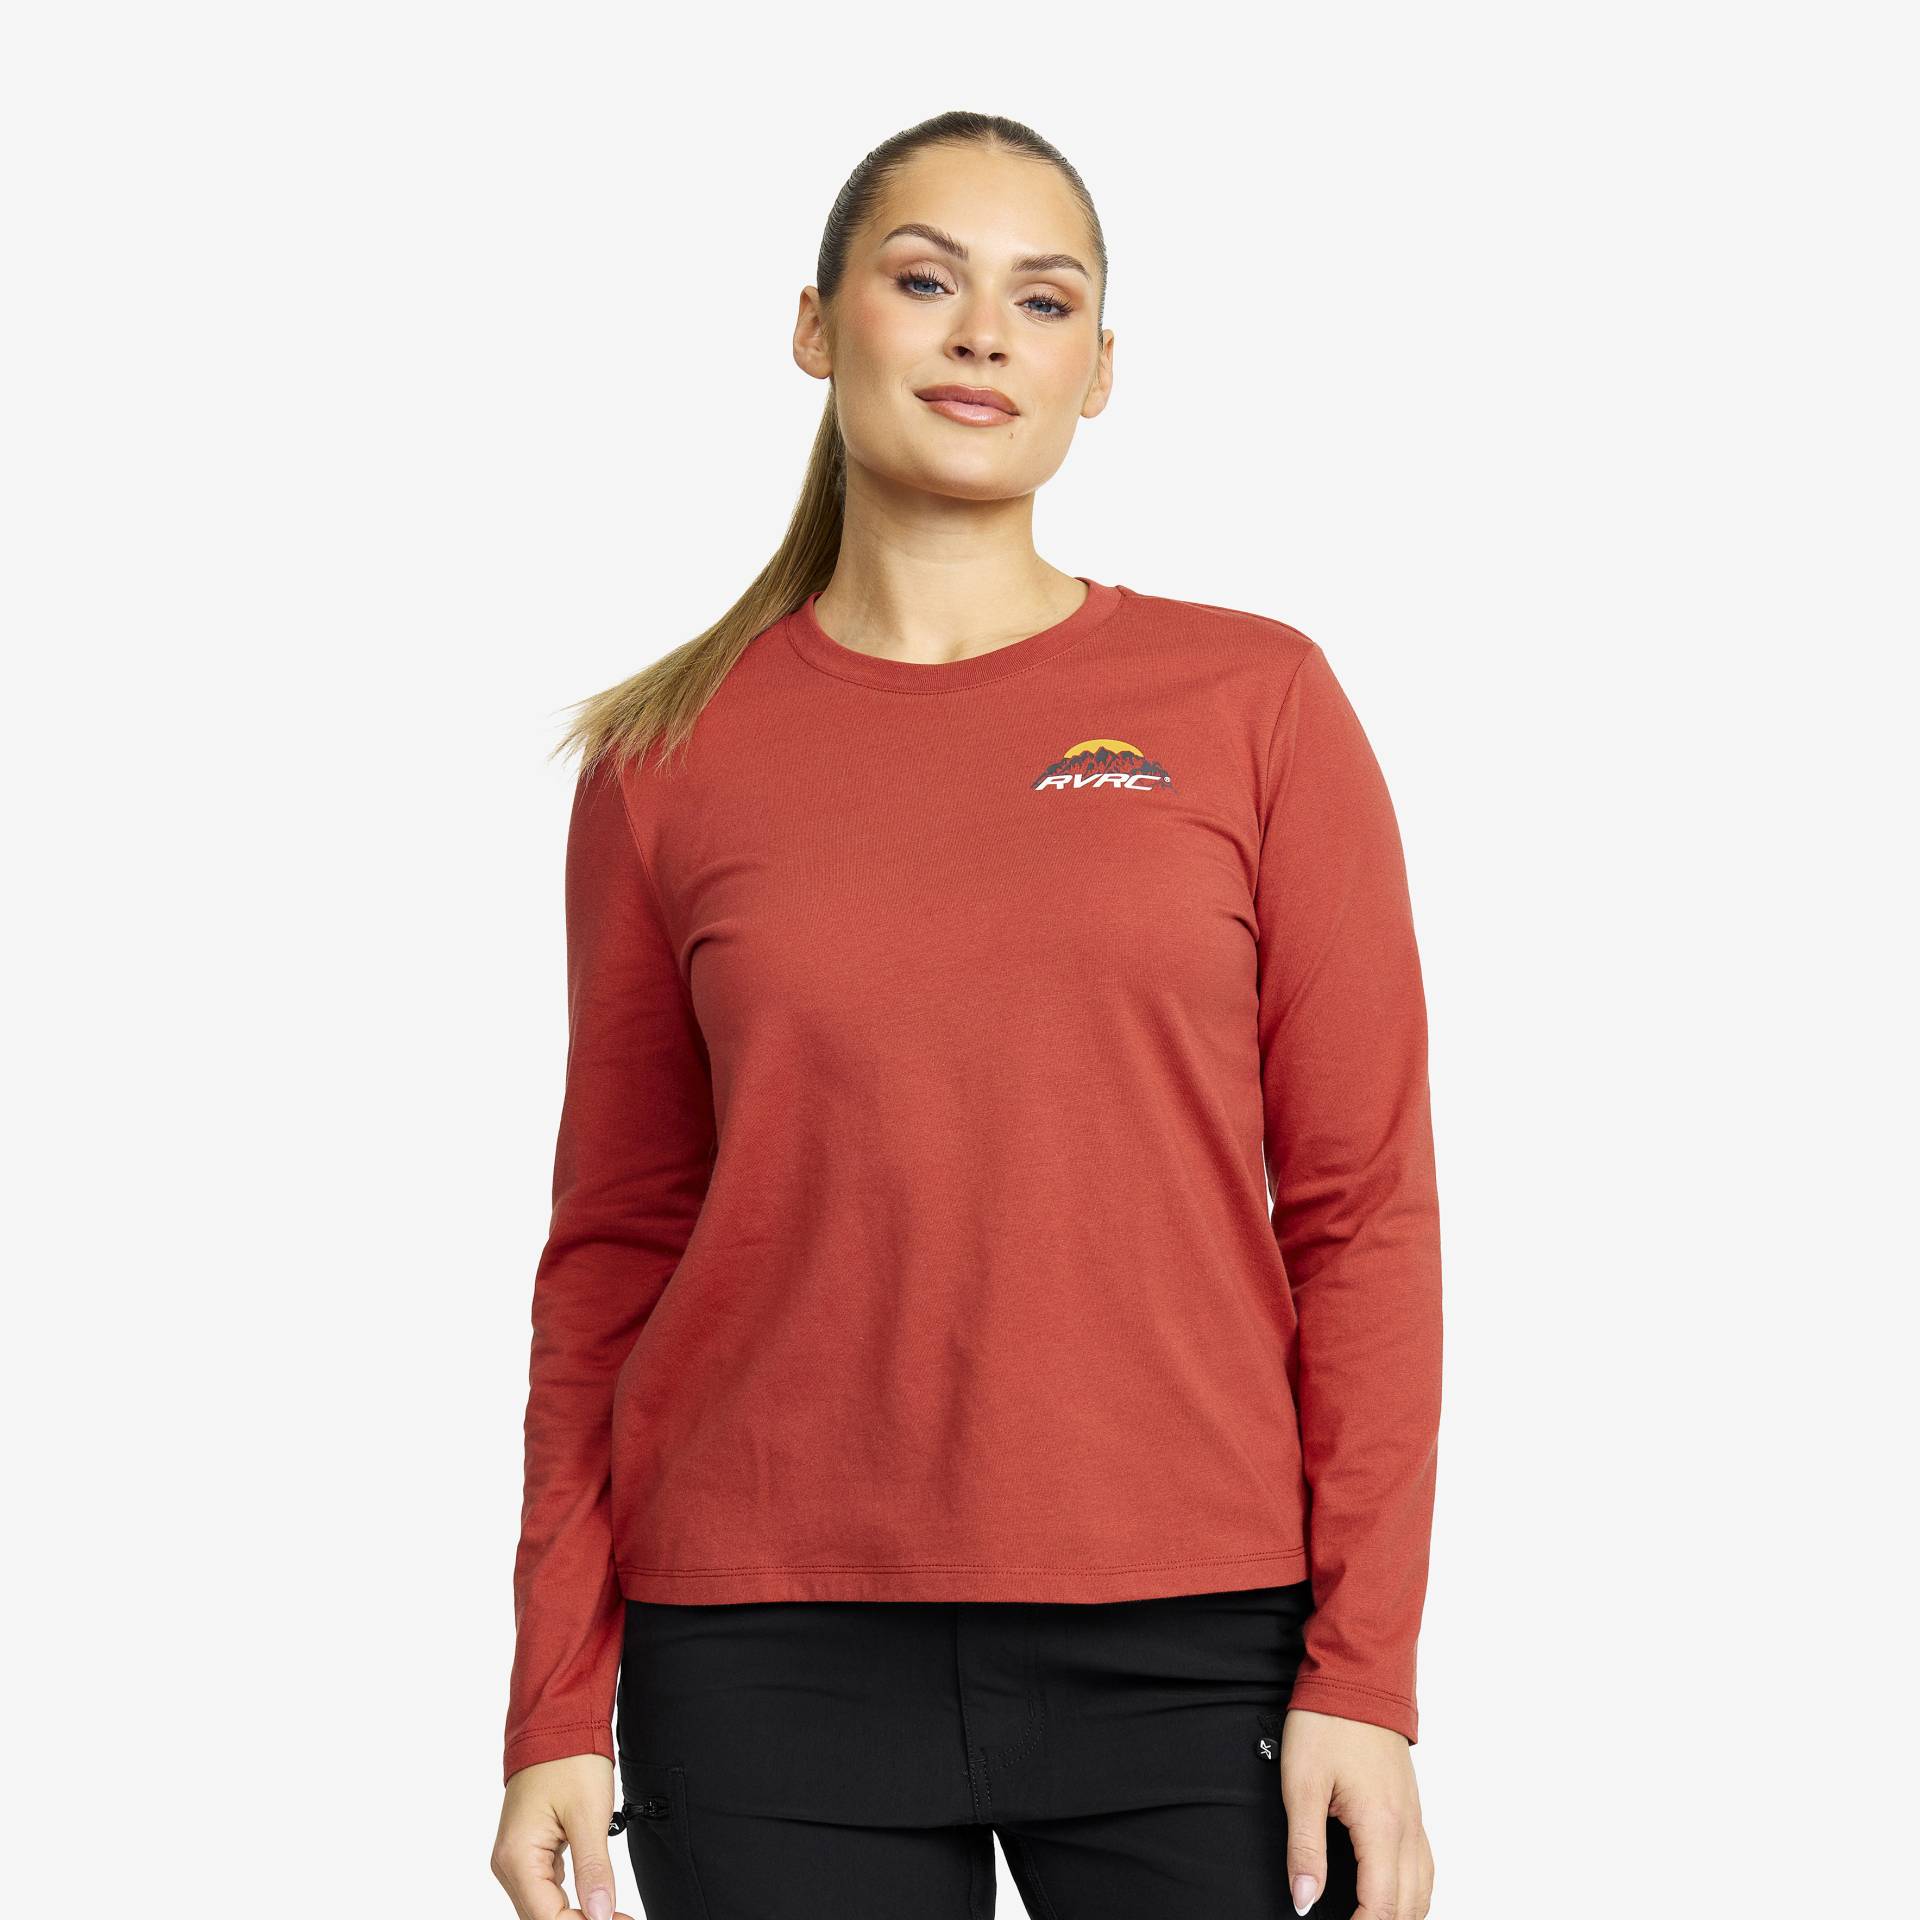 Easy Mountain Long-sleeved T-shirt Damen Cinnabar, Größe:S - Damen > Oberteile > Hemdblusen & Langarmshirts von RevolutionRace